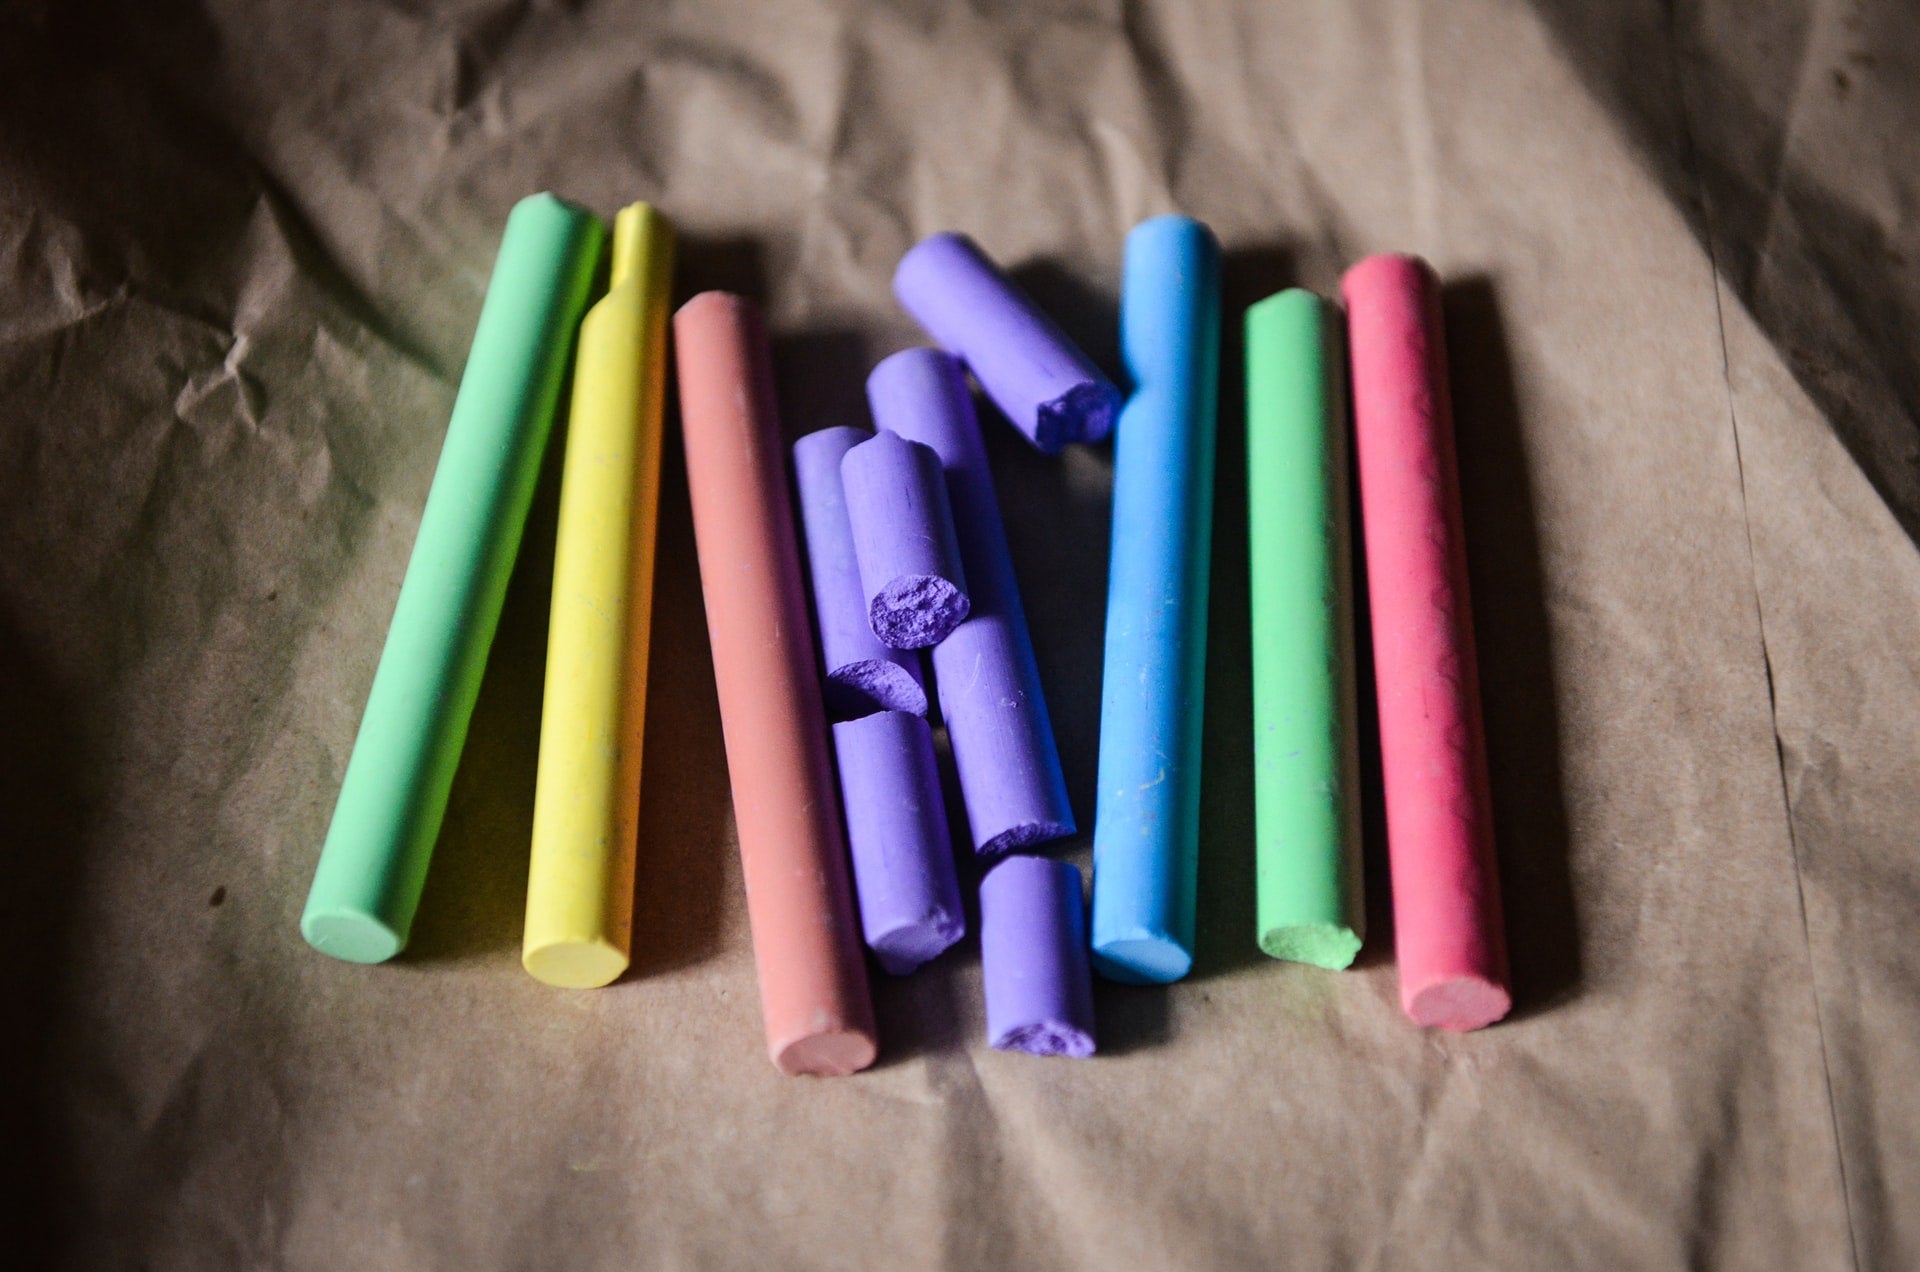 Recycled crayons from Unsplash - https://unsplash.com/photos/IEtUye-b28A